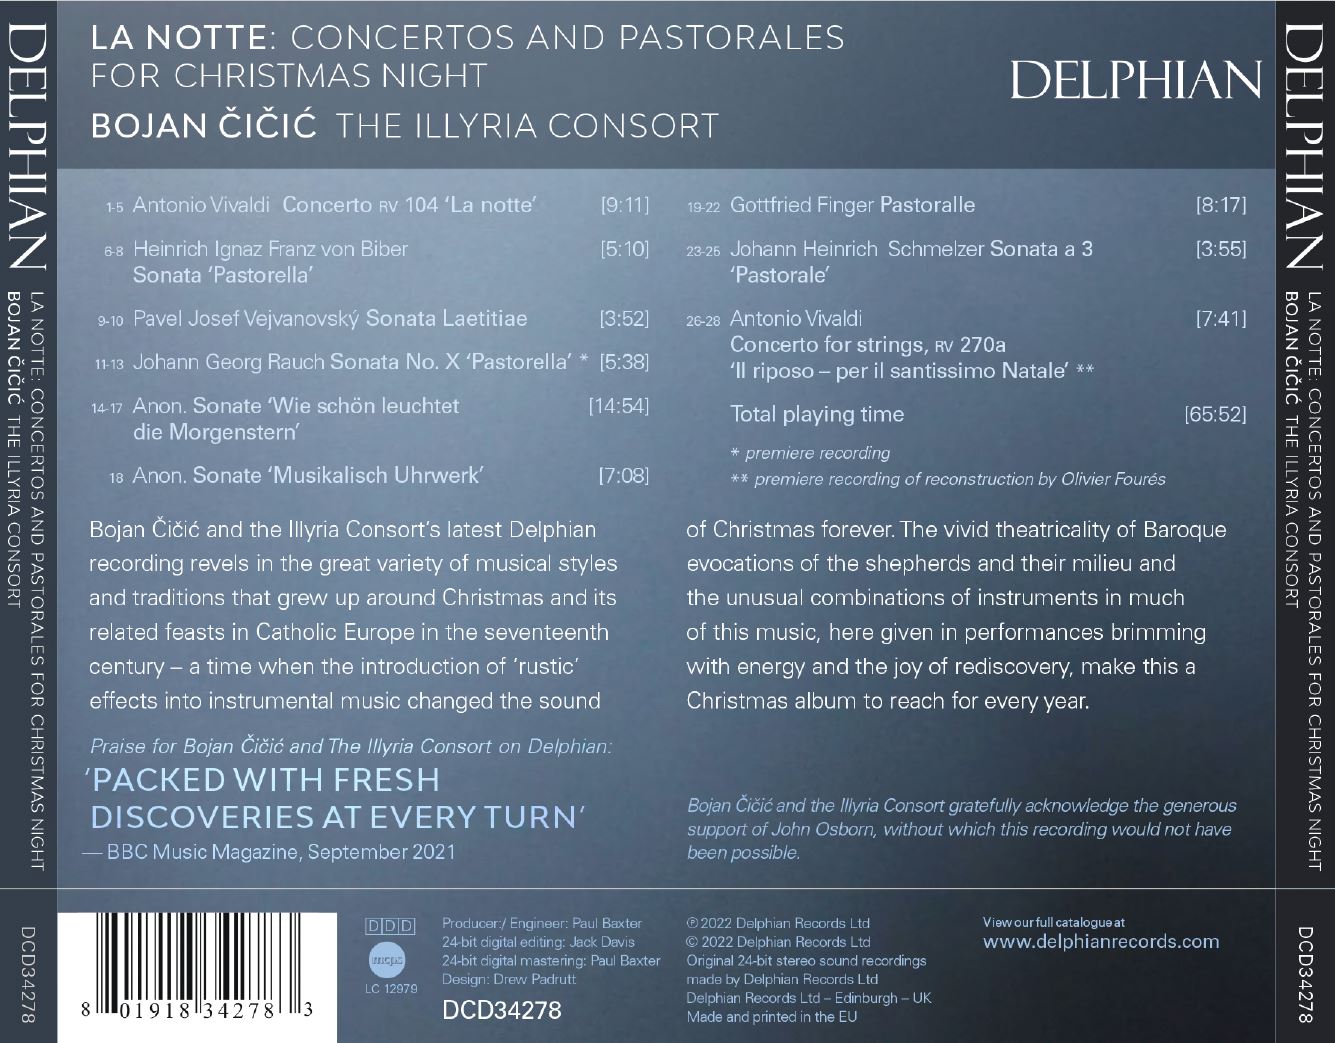 La Notte': Concertos & Pastorales for Christmas Night - Delphian